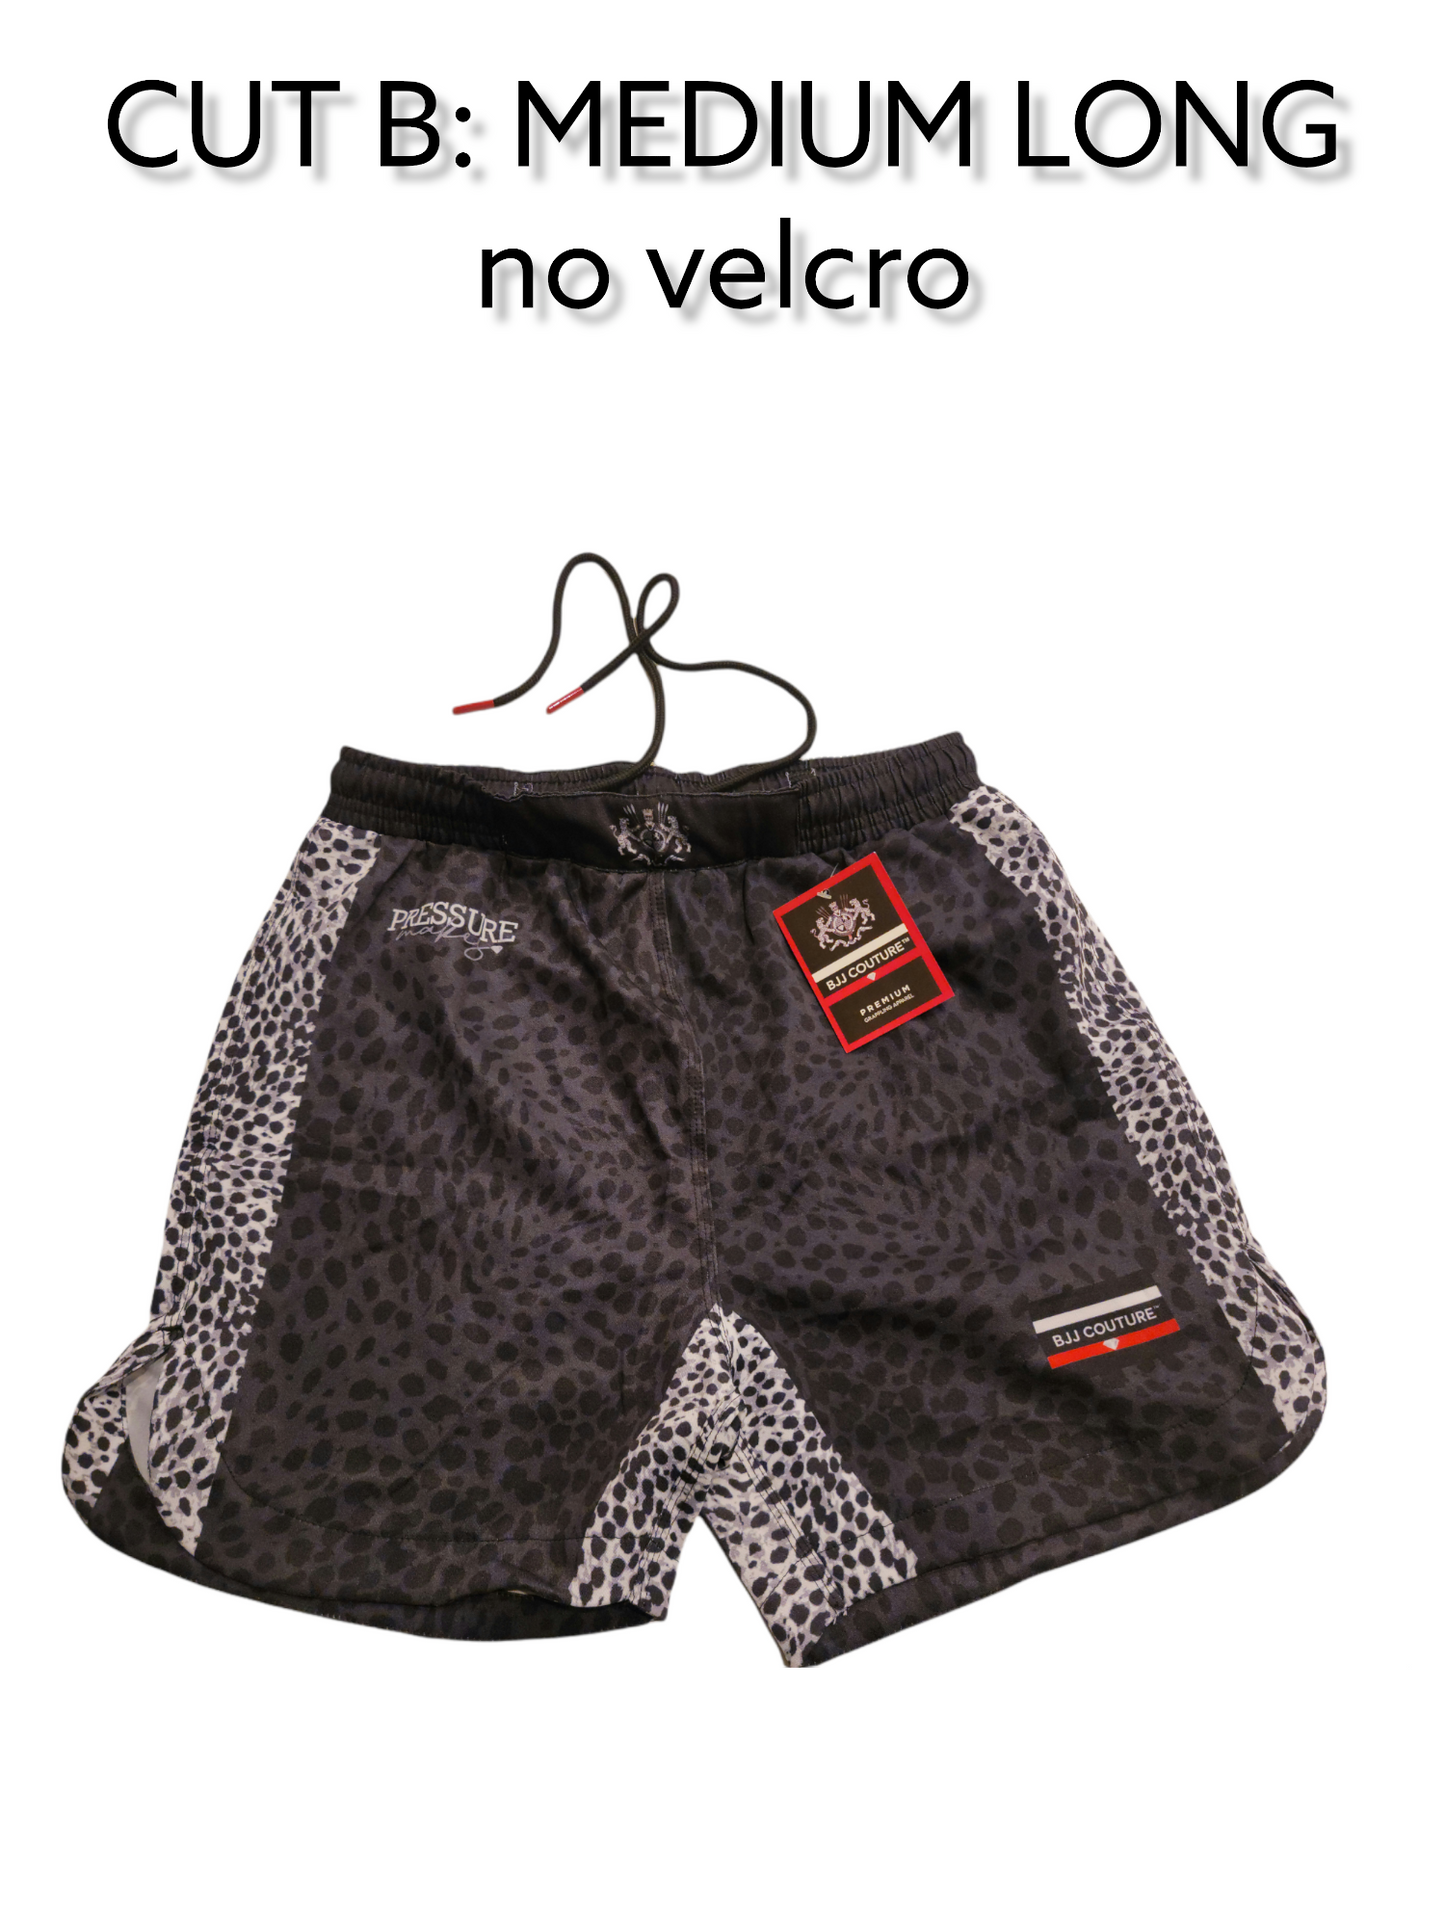 BJJ Couture Leopard Print v1 Black & Grey Grappling Shorts